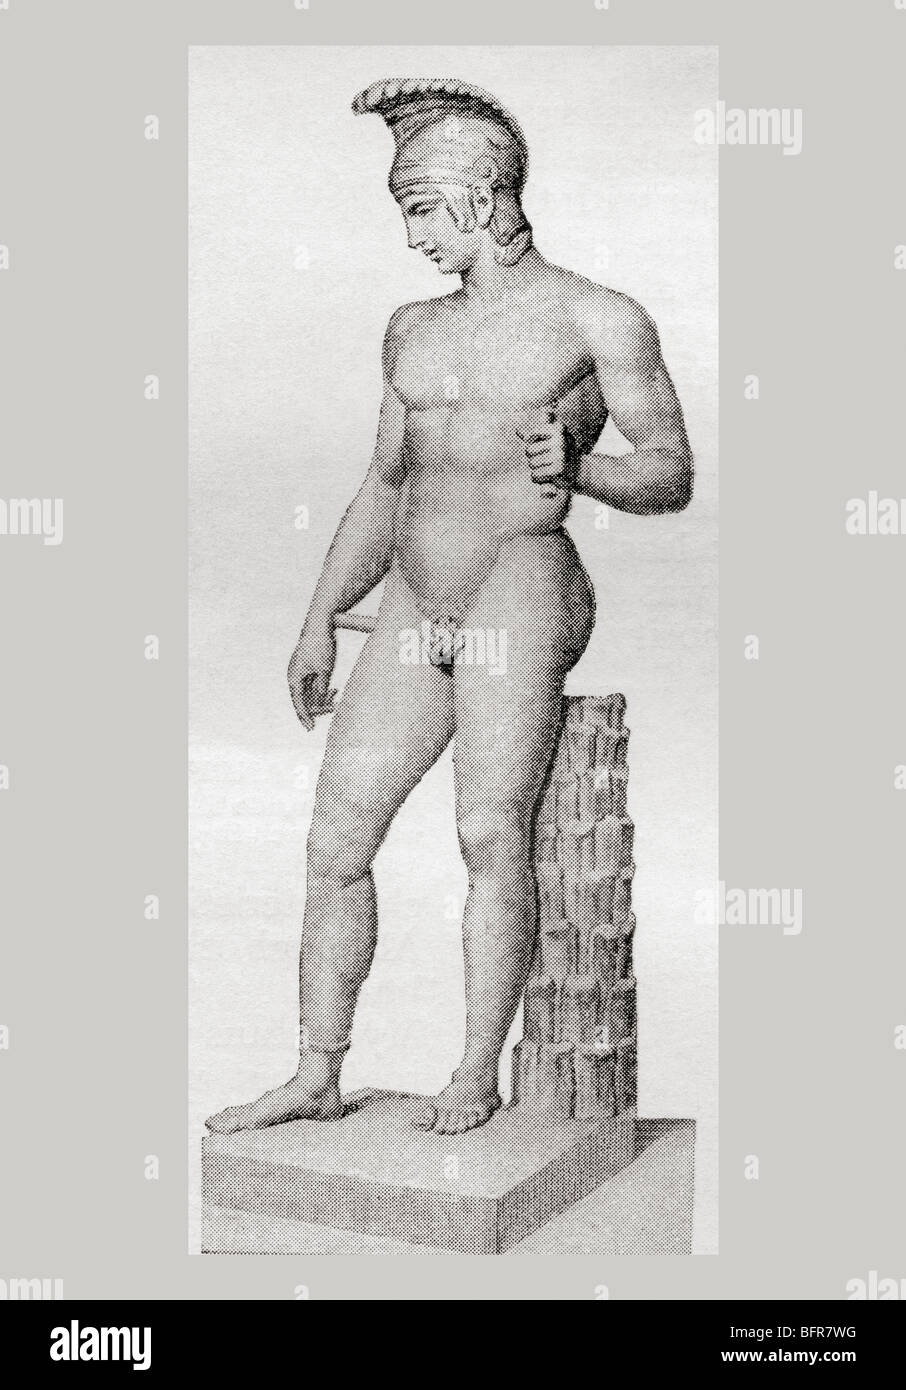 Achilles. Greek mythological hero of the Trojan War. Stock Photo